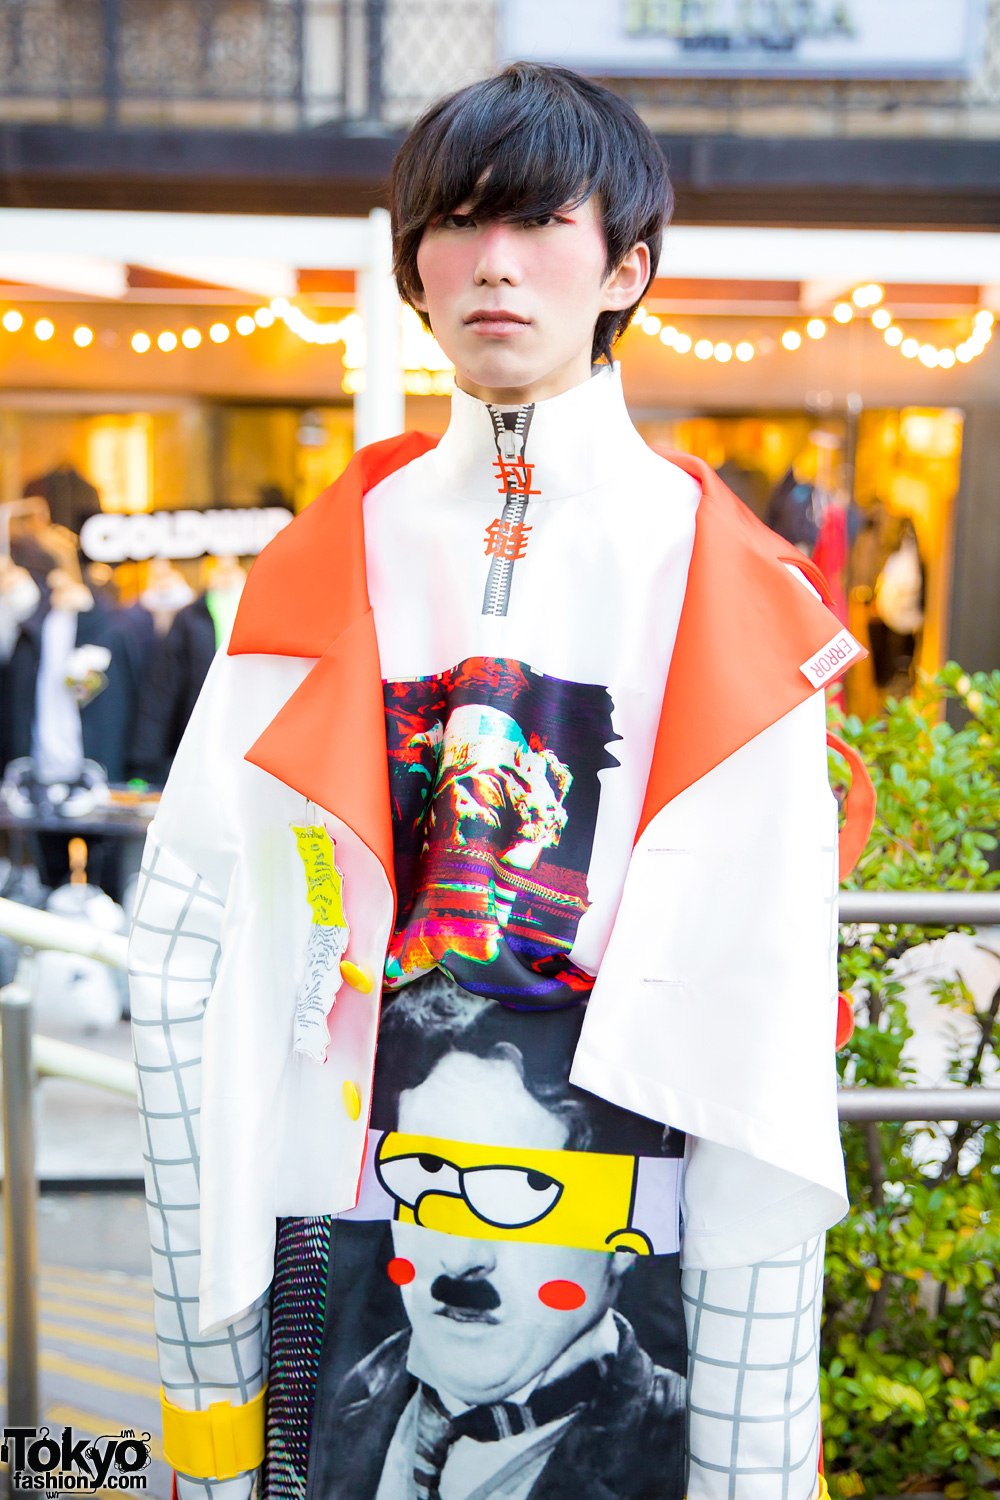 Avant-Garde Japanese Street Style w/ Long Graphic Jacket by Seki 